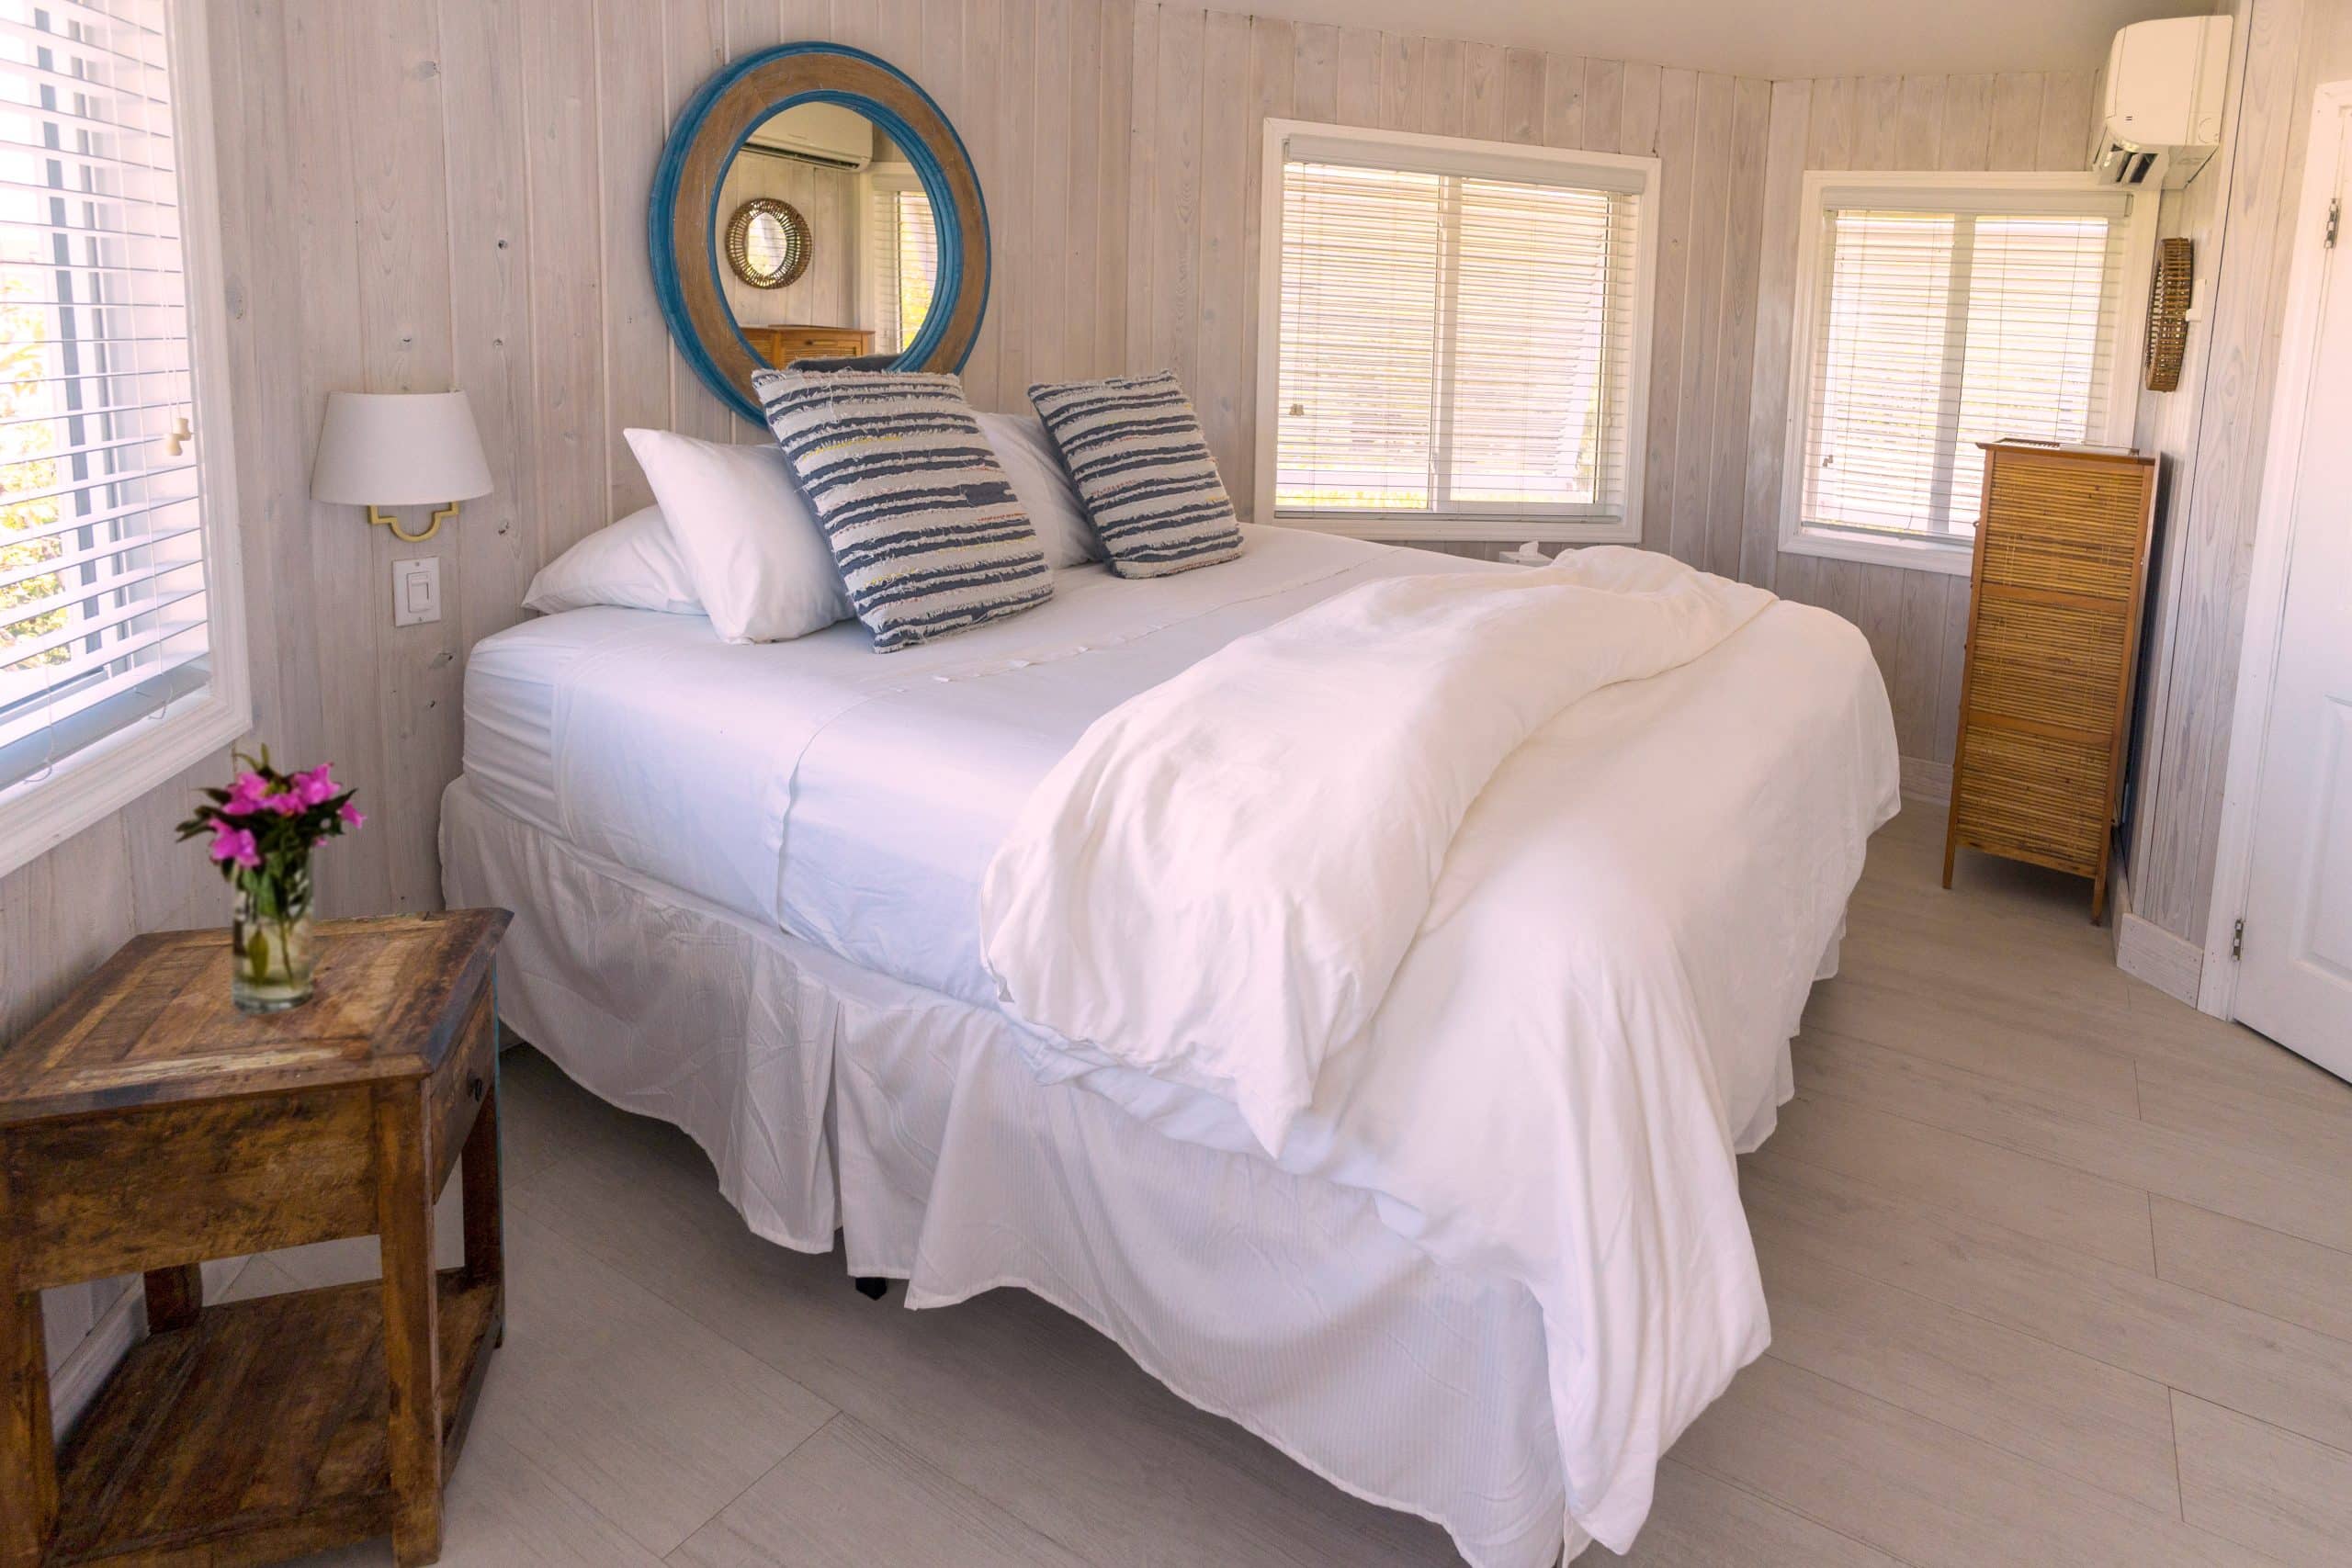 Staniel Cay Yacht Club Bedroom Vacation Rental